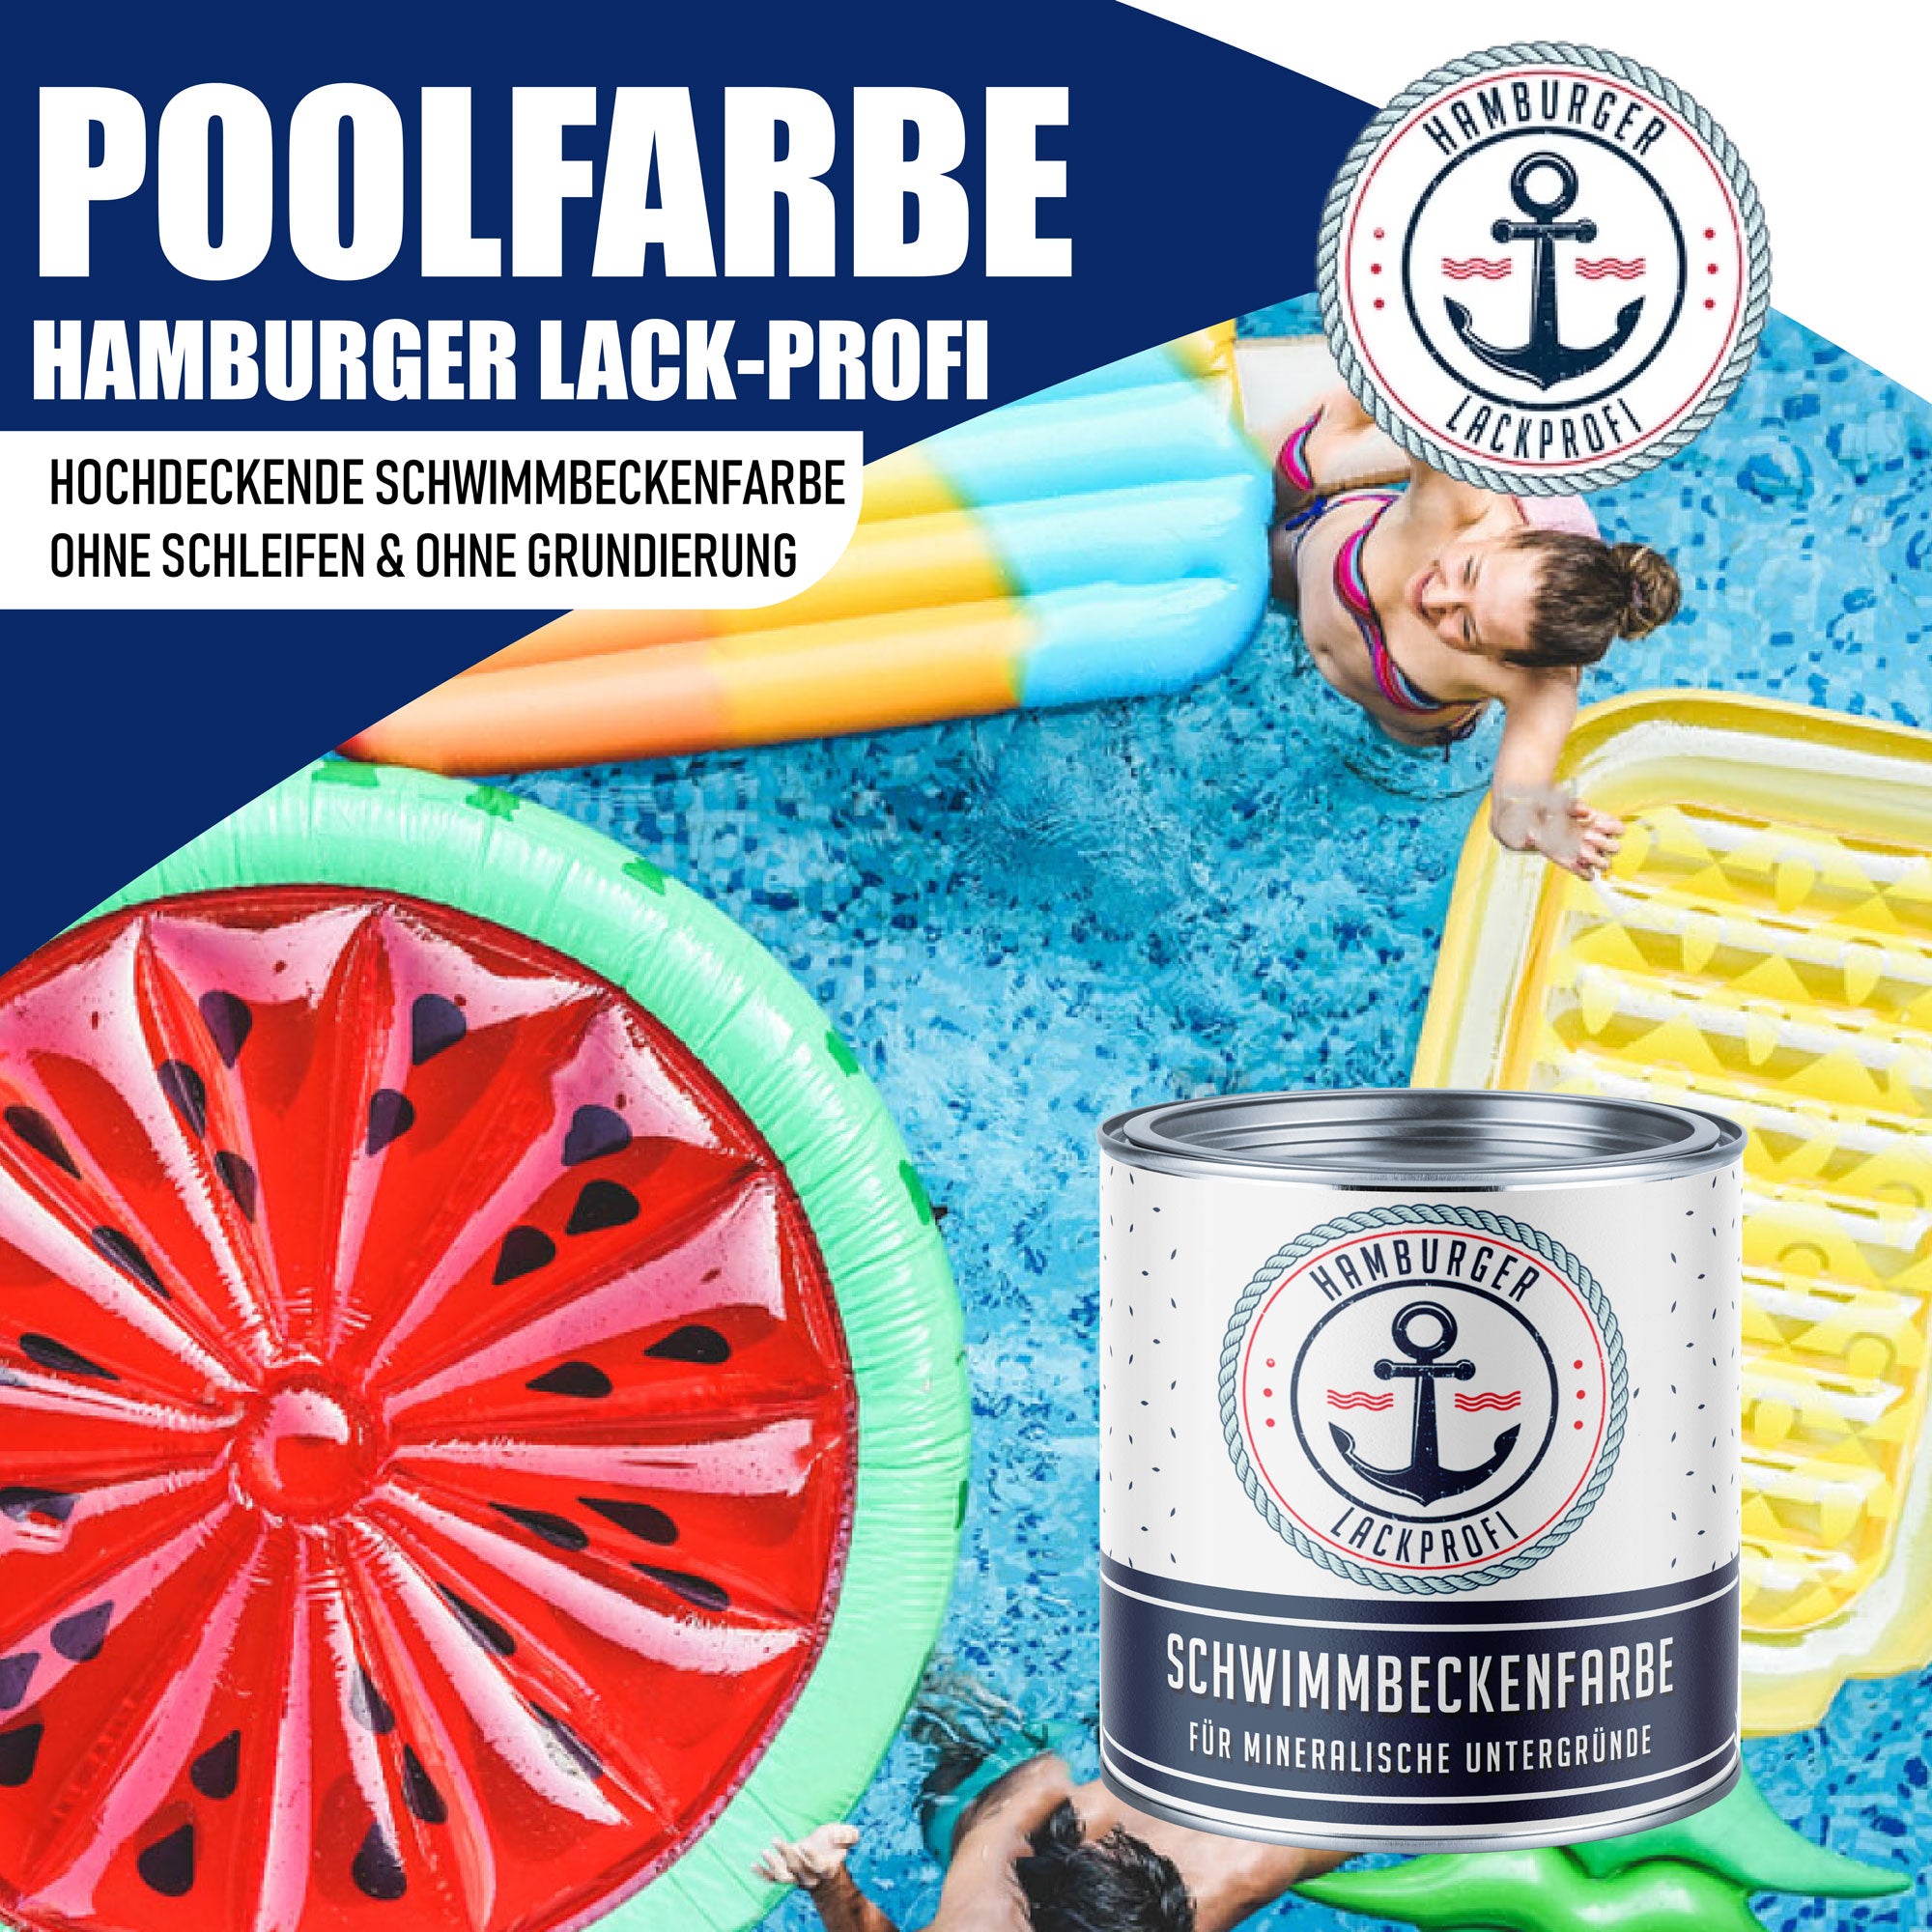 Hamburger Lack-Profi Schwimmbeckenfarbe Kobaltblau RAL 5013 - hochdeckende Poolfarbe